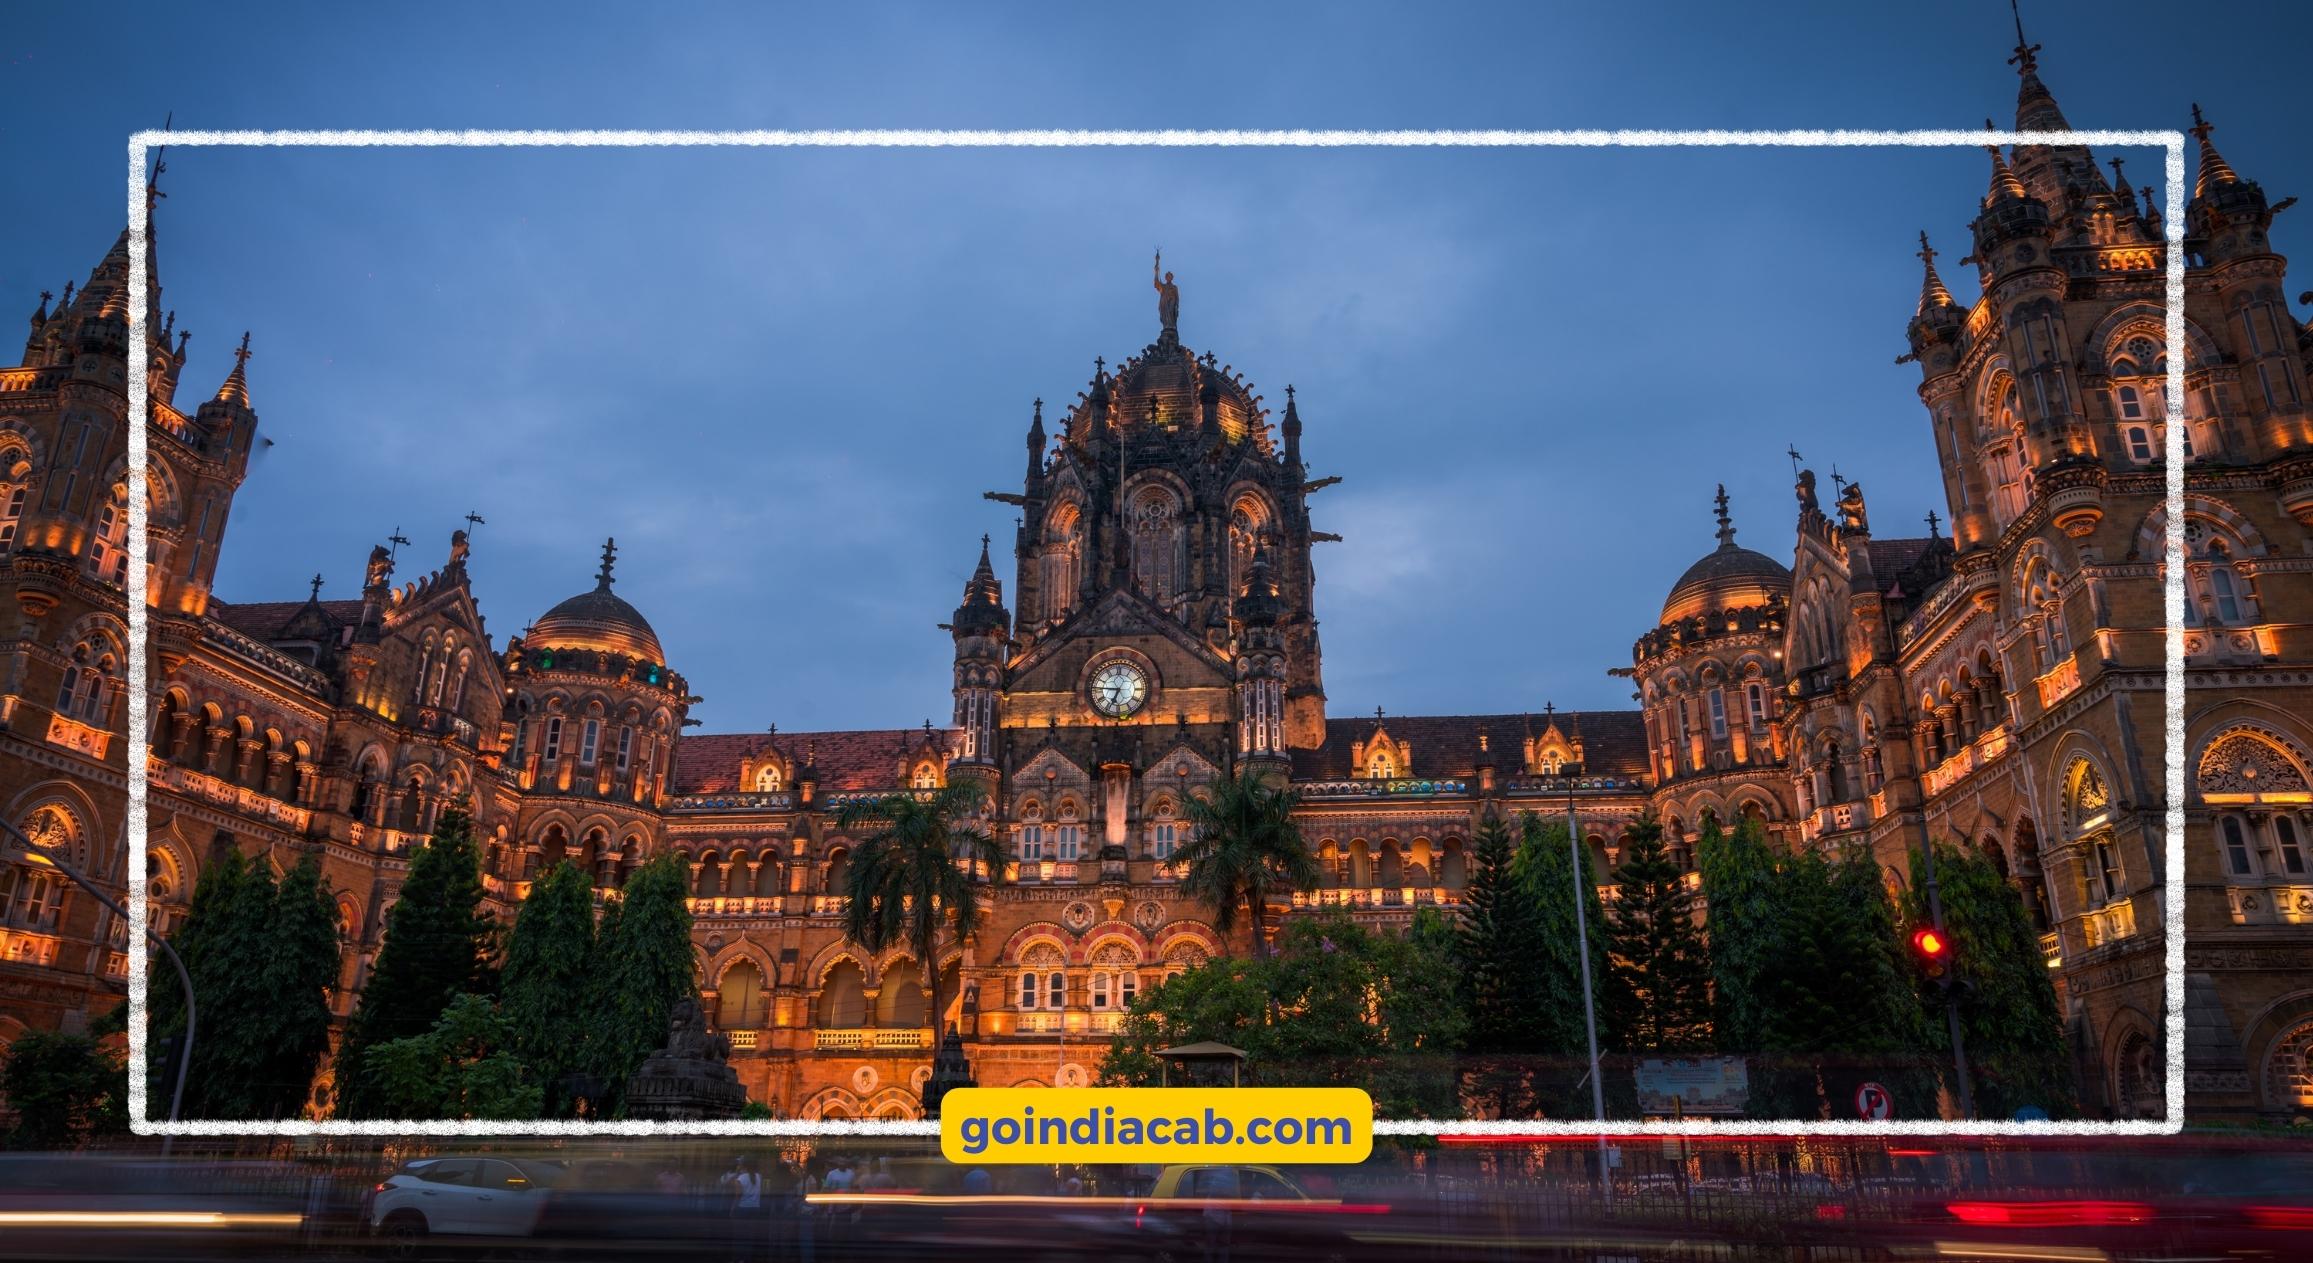 Tour 3 Image in Mumbai goindiacab